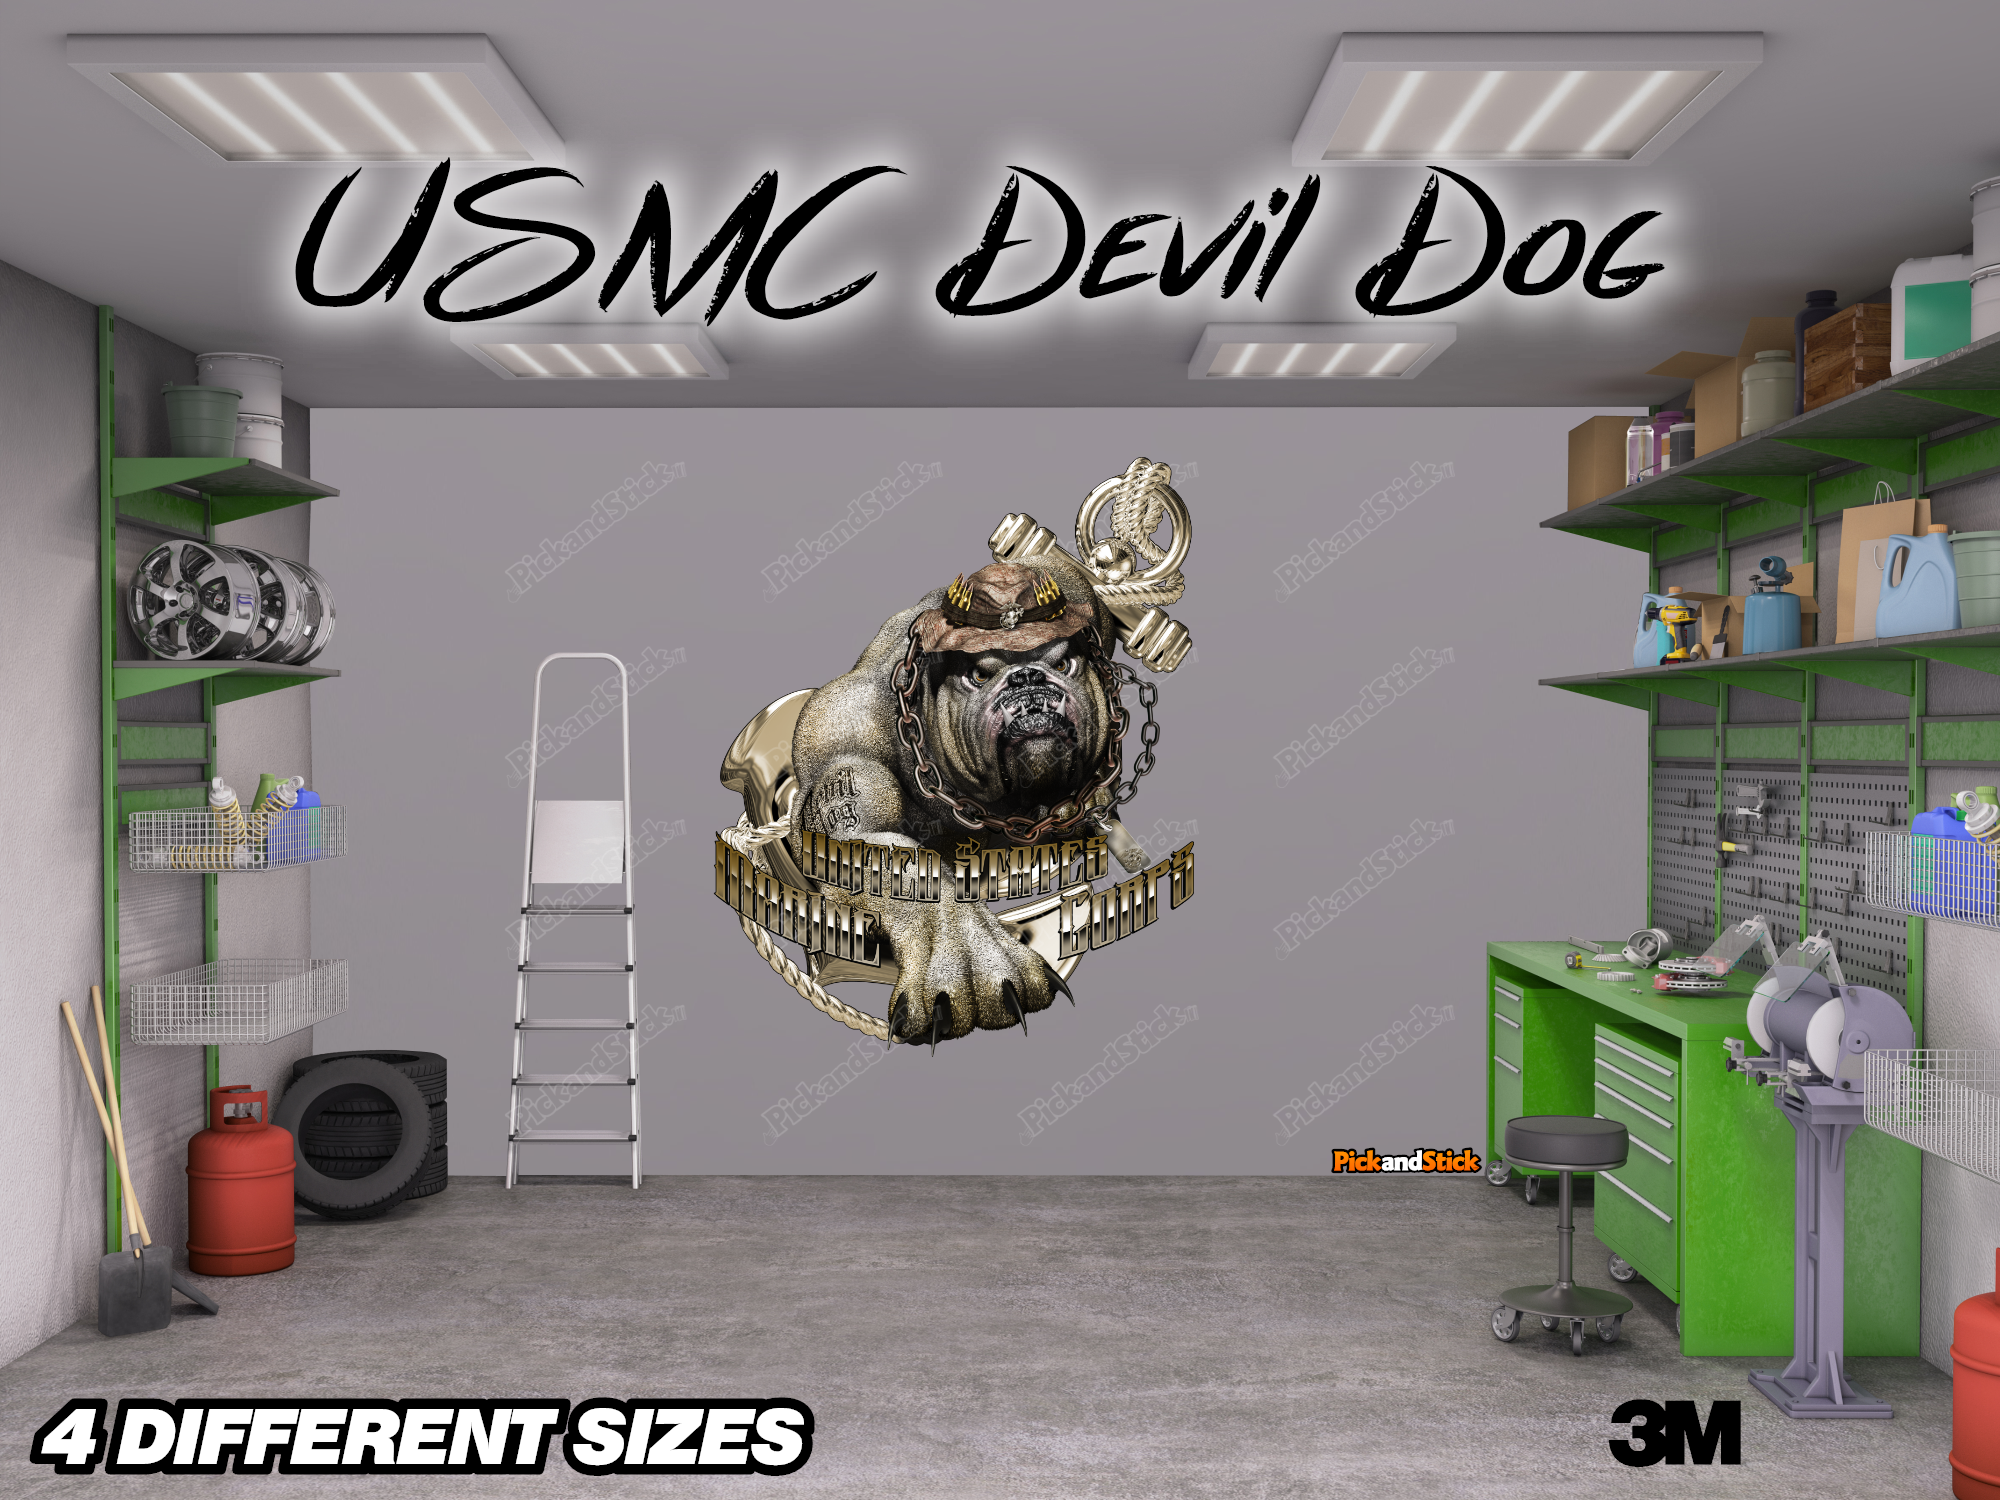 USMC Devil Dog Wall Graphic - PickandStickcom